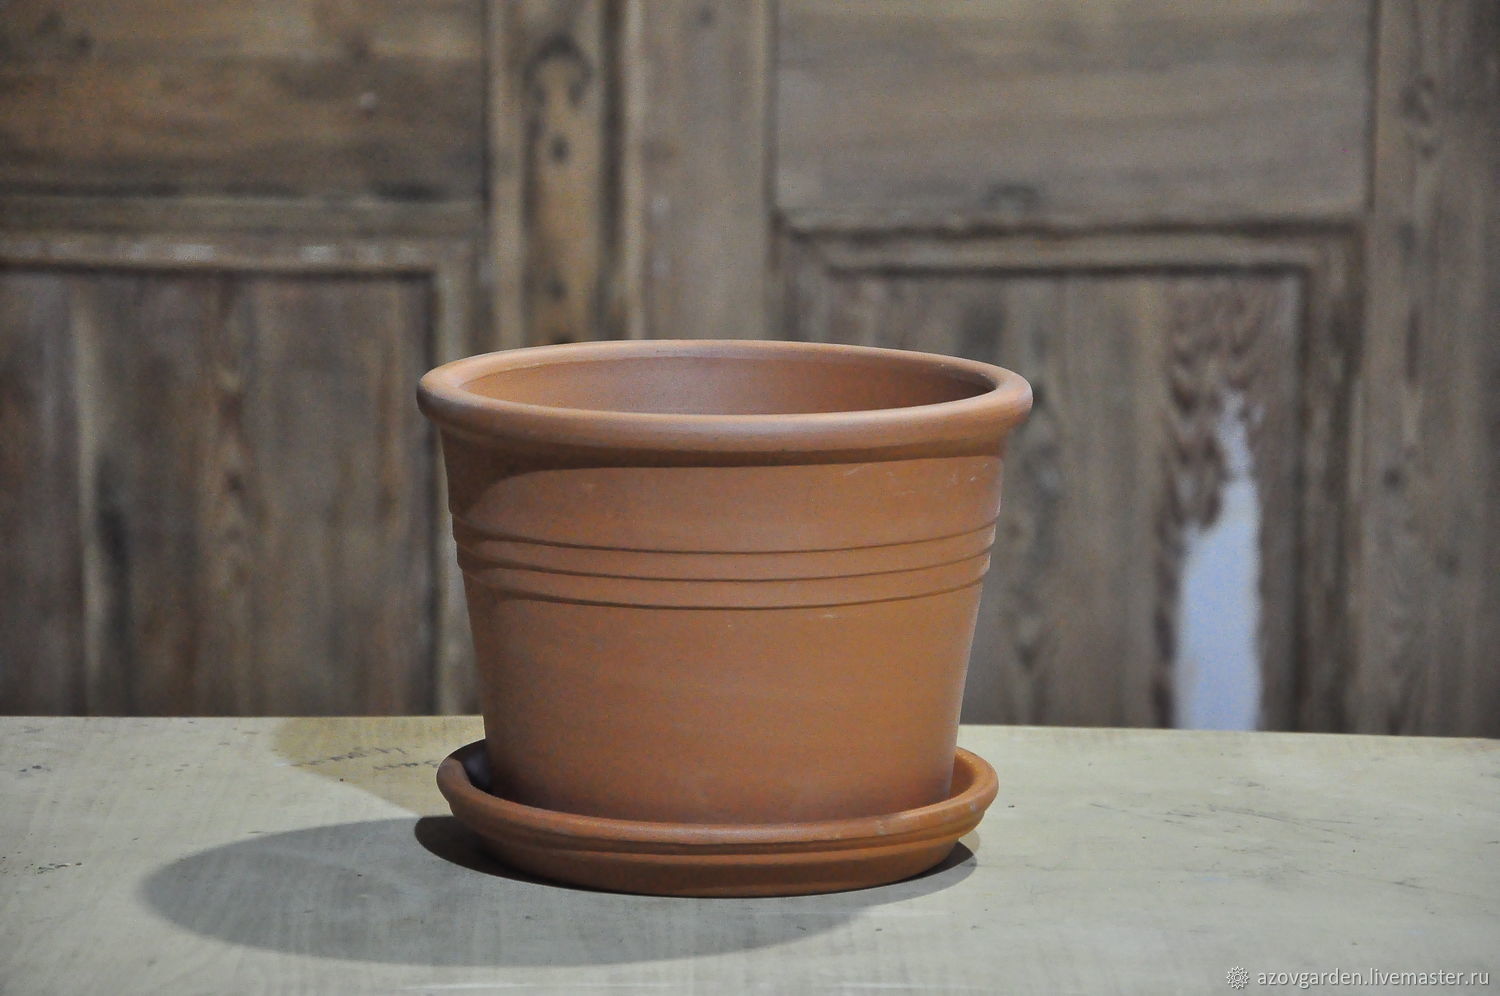 Terracotta Fireplace Lovely Terracotta Pot â3 for Home and Garden Provence Country Style – ÐºÑÐ¿Ð¸ÑÑ Ð½Ð° Ð¯ÑÐ¼Ð°ÑÐºÐµ ÐÐ°ÑÑÐµÑÐ¾Ð² – Im6lb